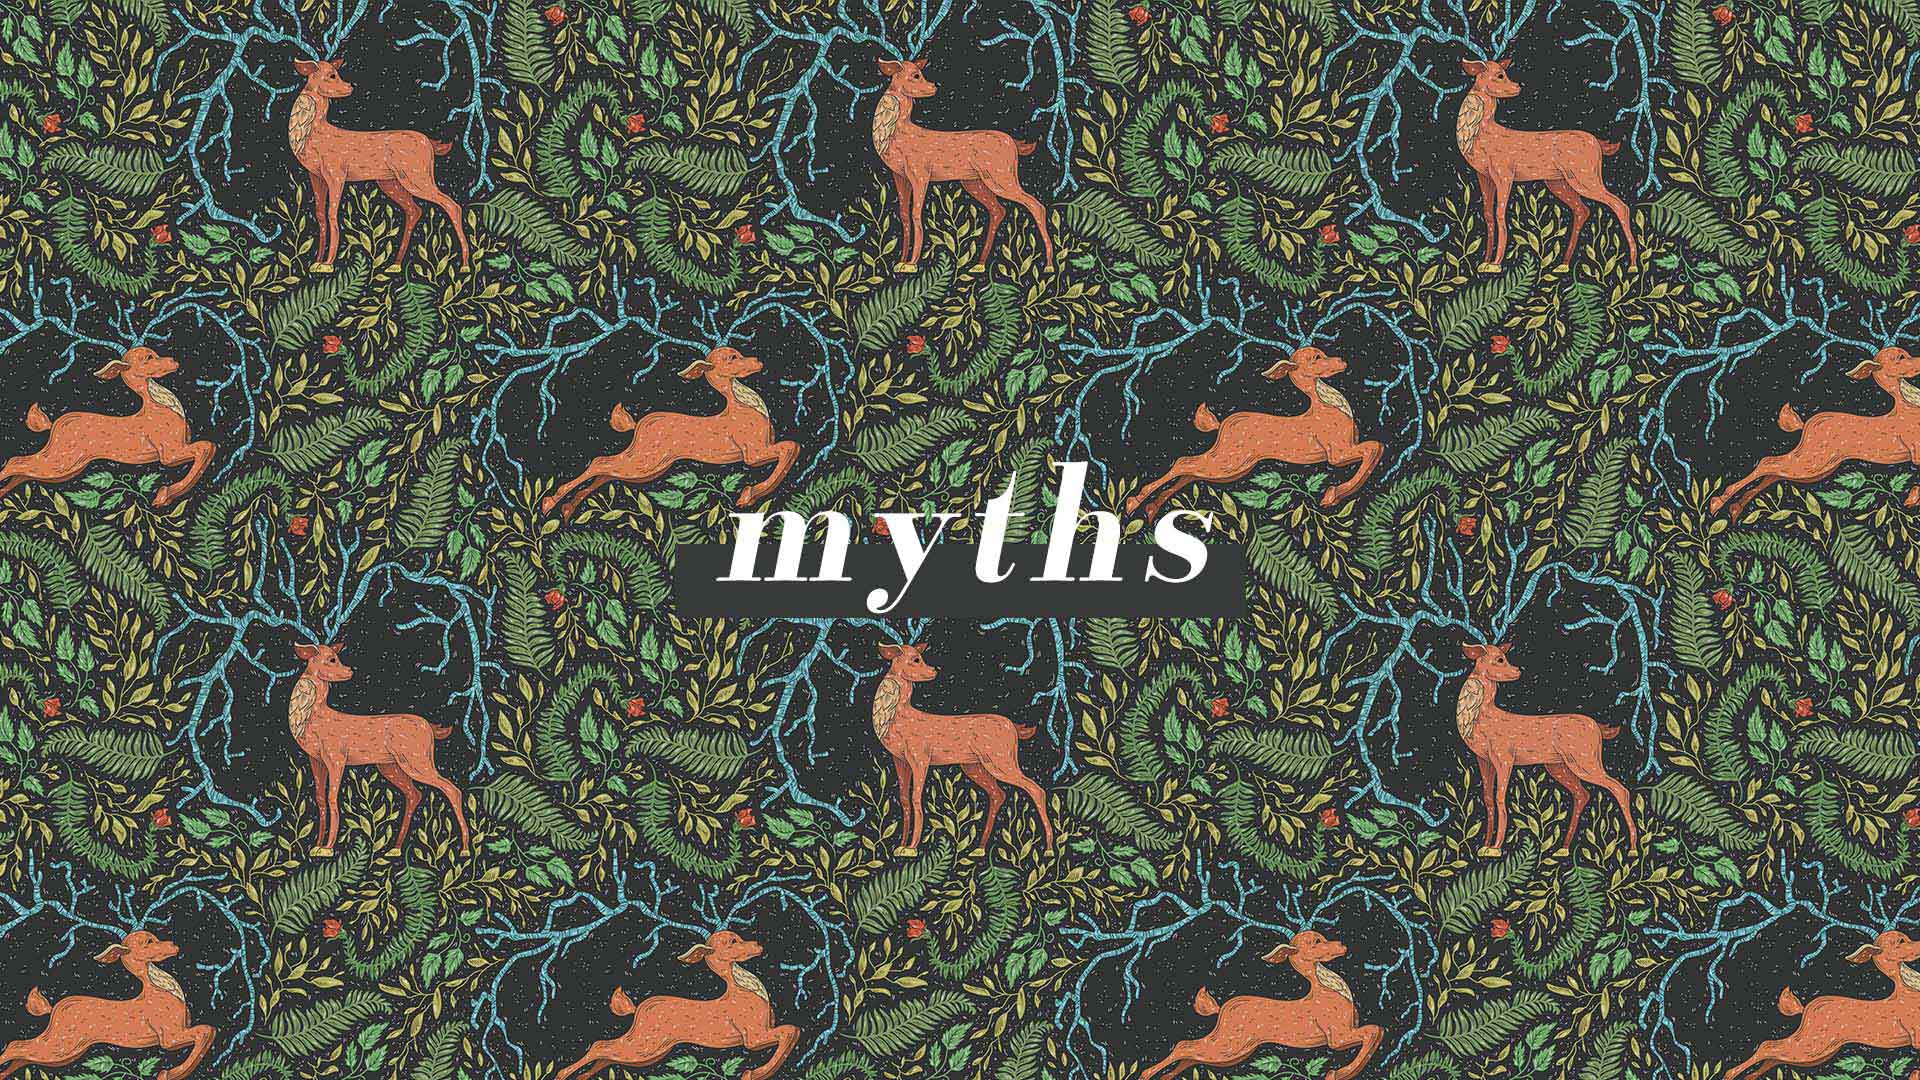 Series: Myths